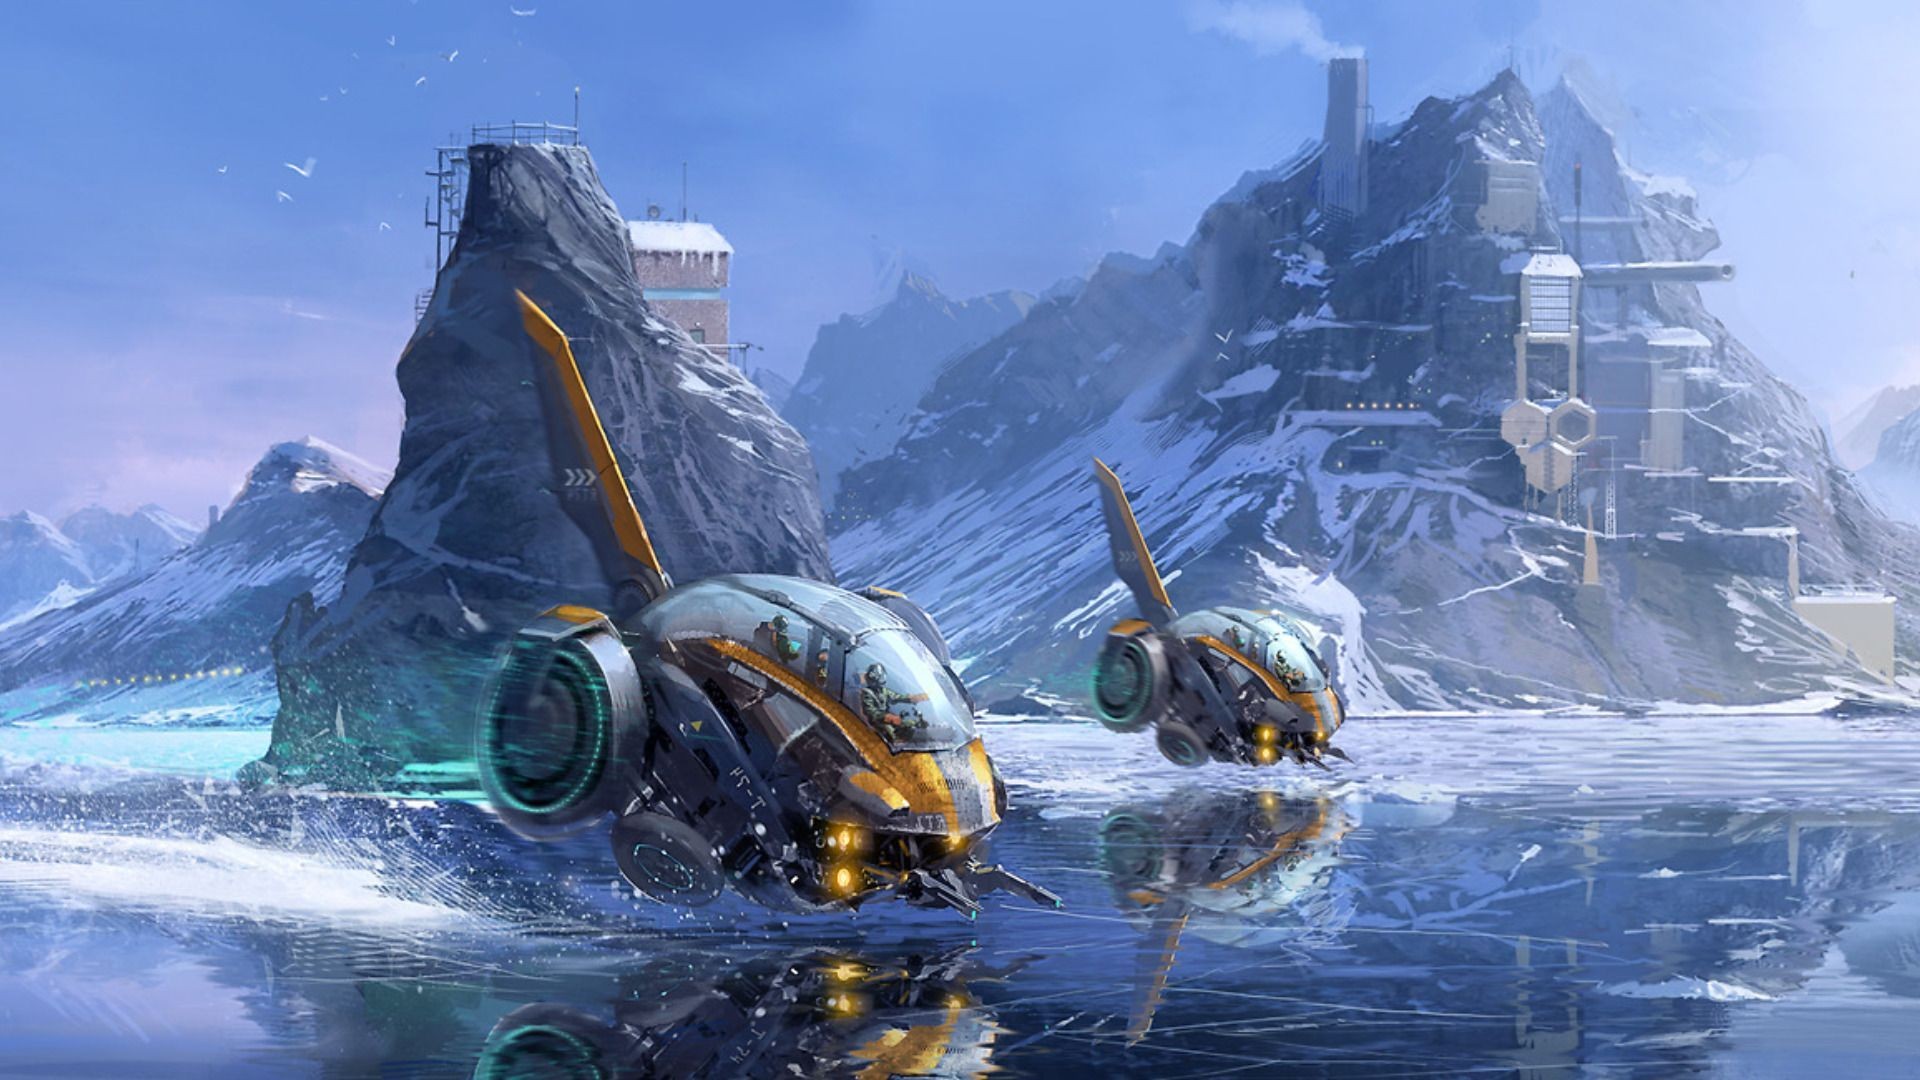 General 1920x1080 artwork spaceship concept art futuristic ice planet science fiction